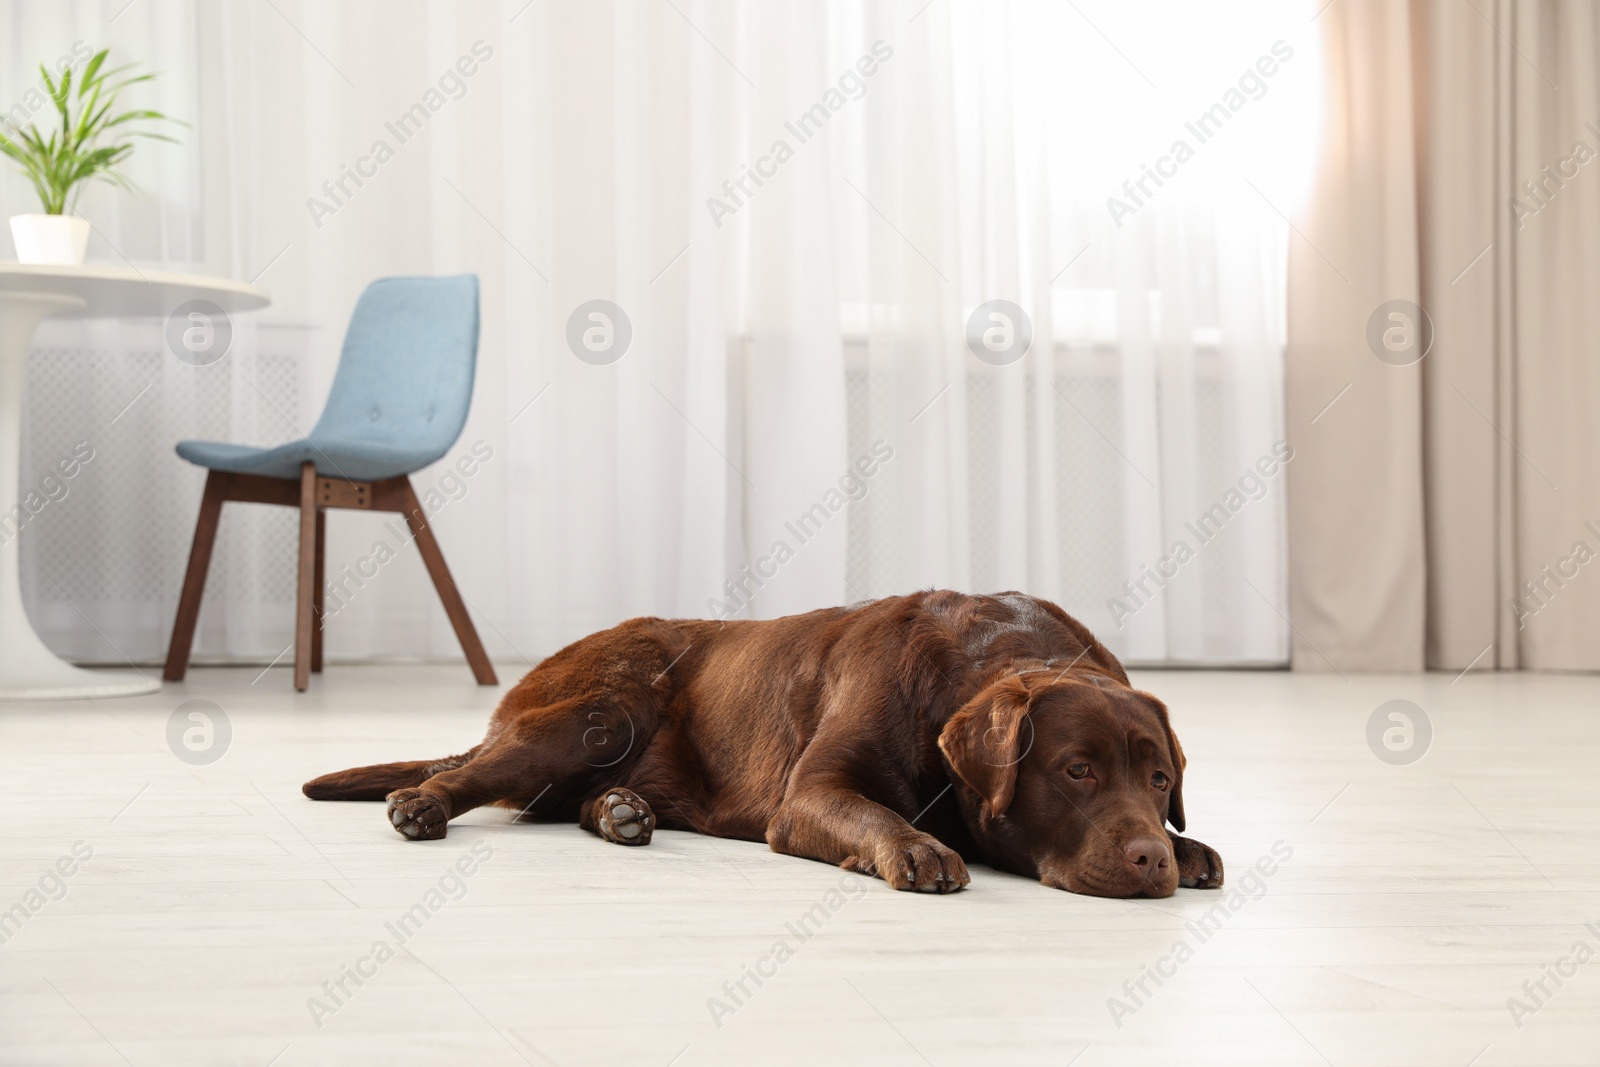 Photo of Cute friendly dog lying on floor in room